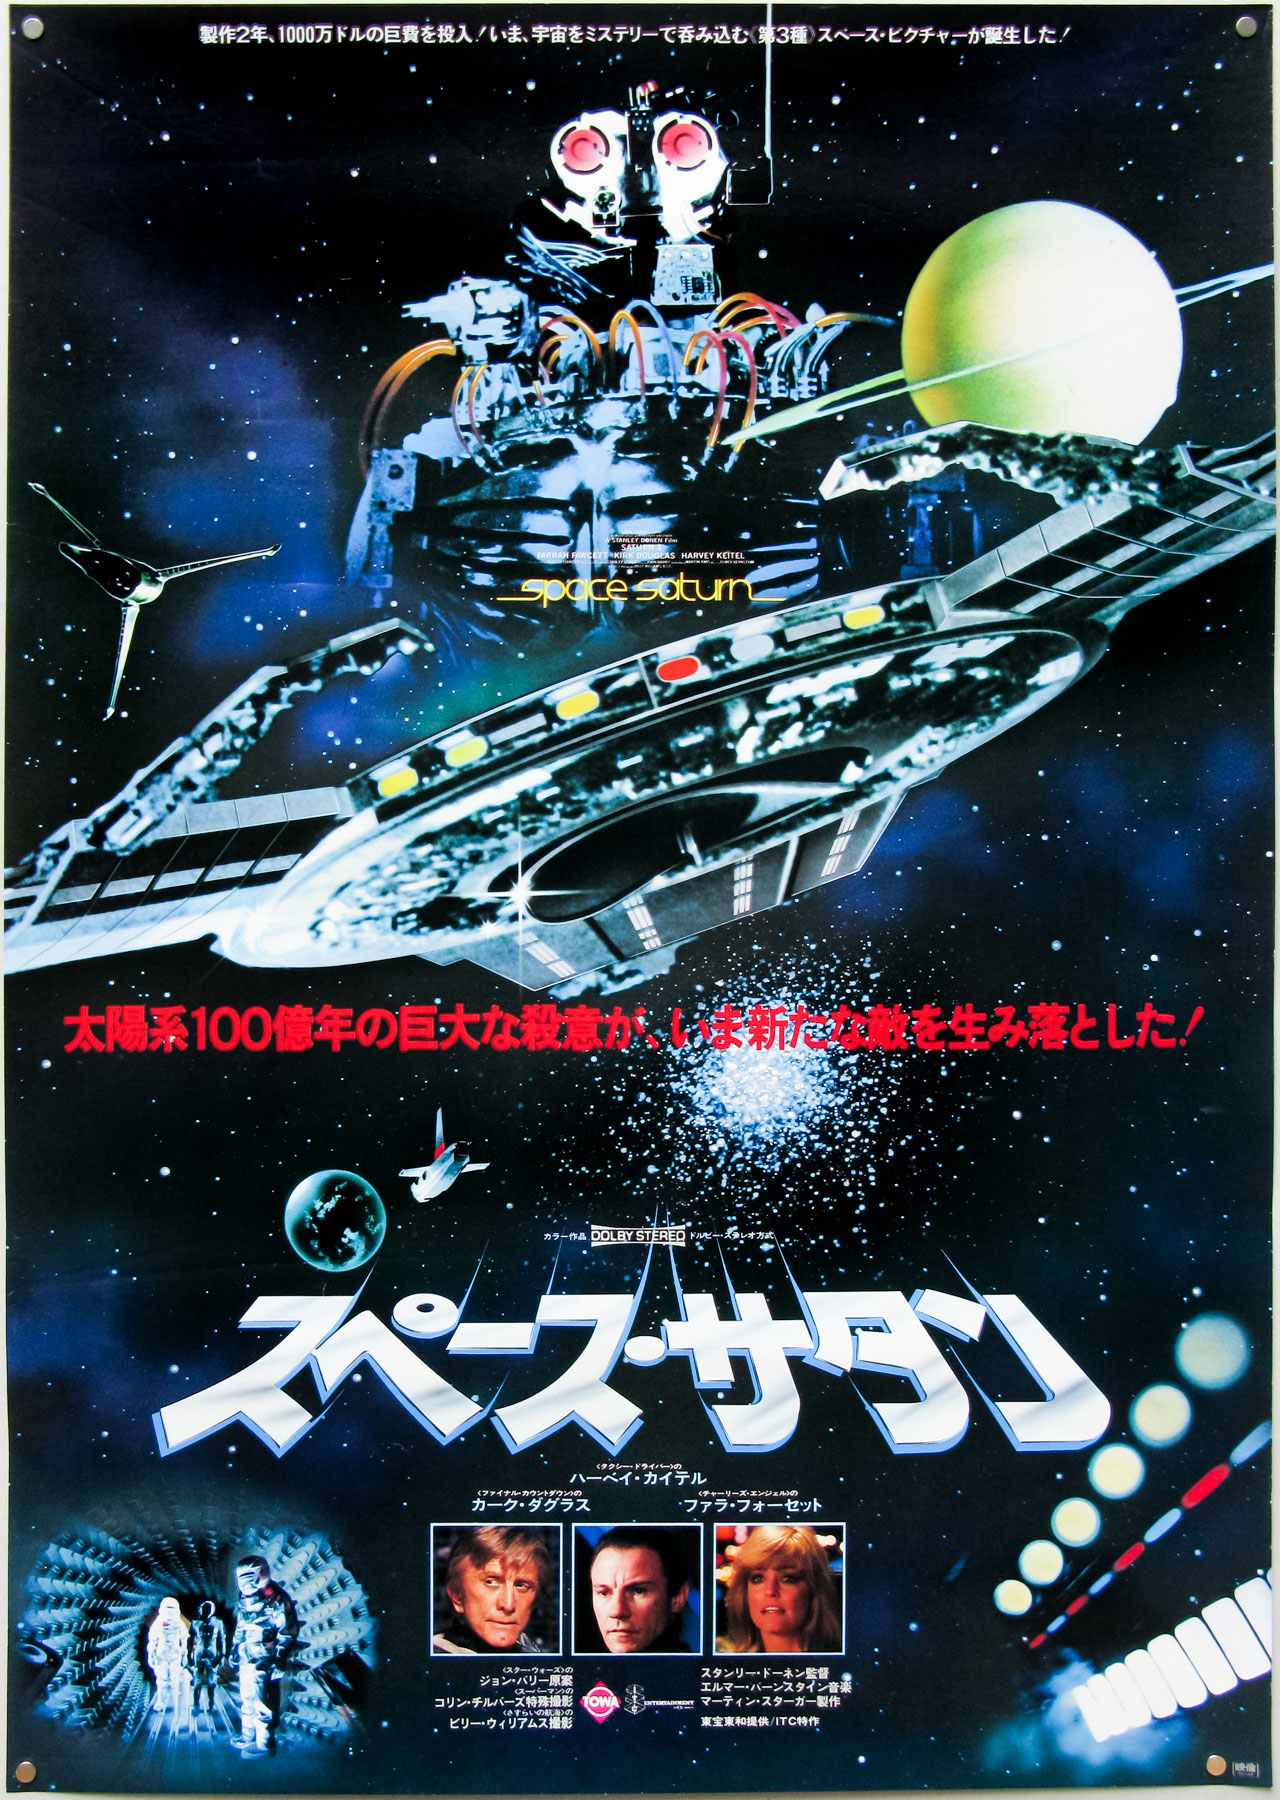 Saturn 3 – Film 89 – Network – tape 874